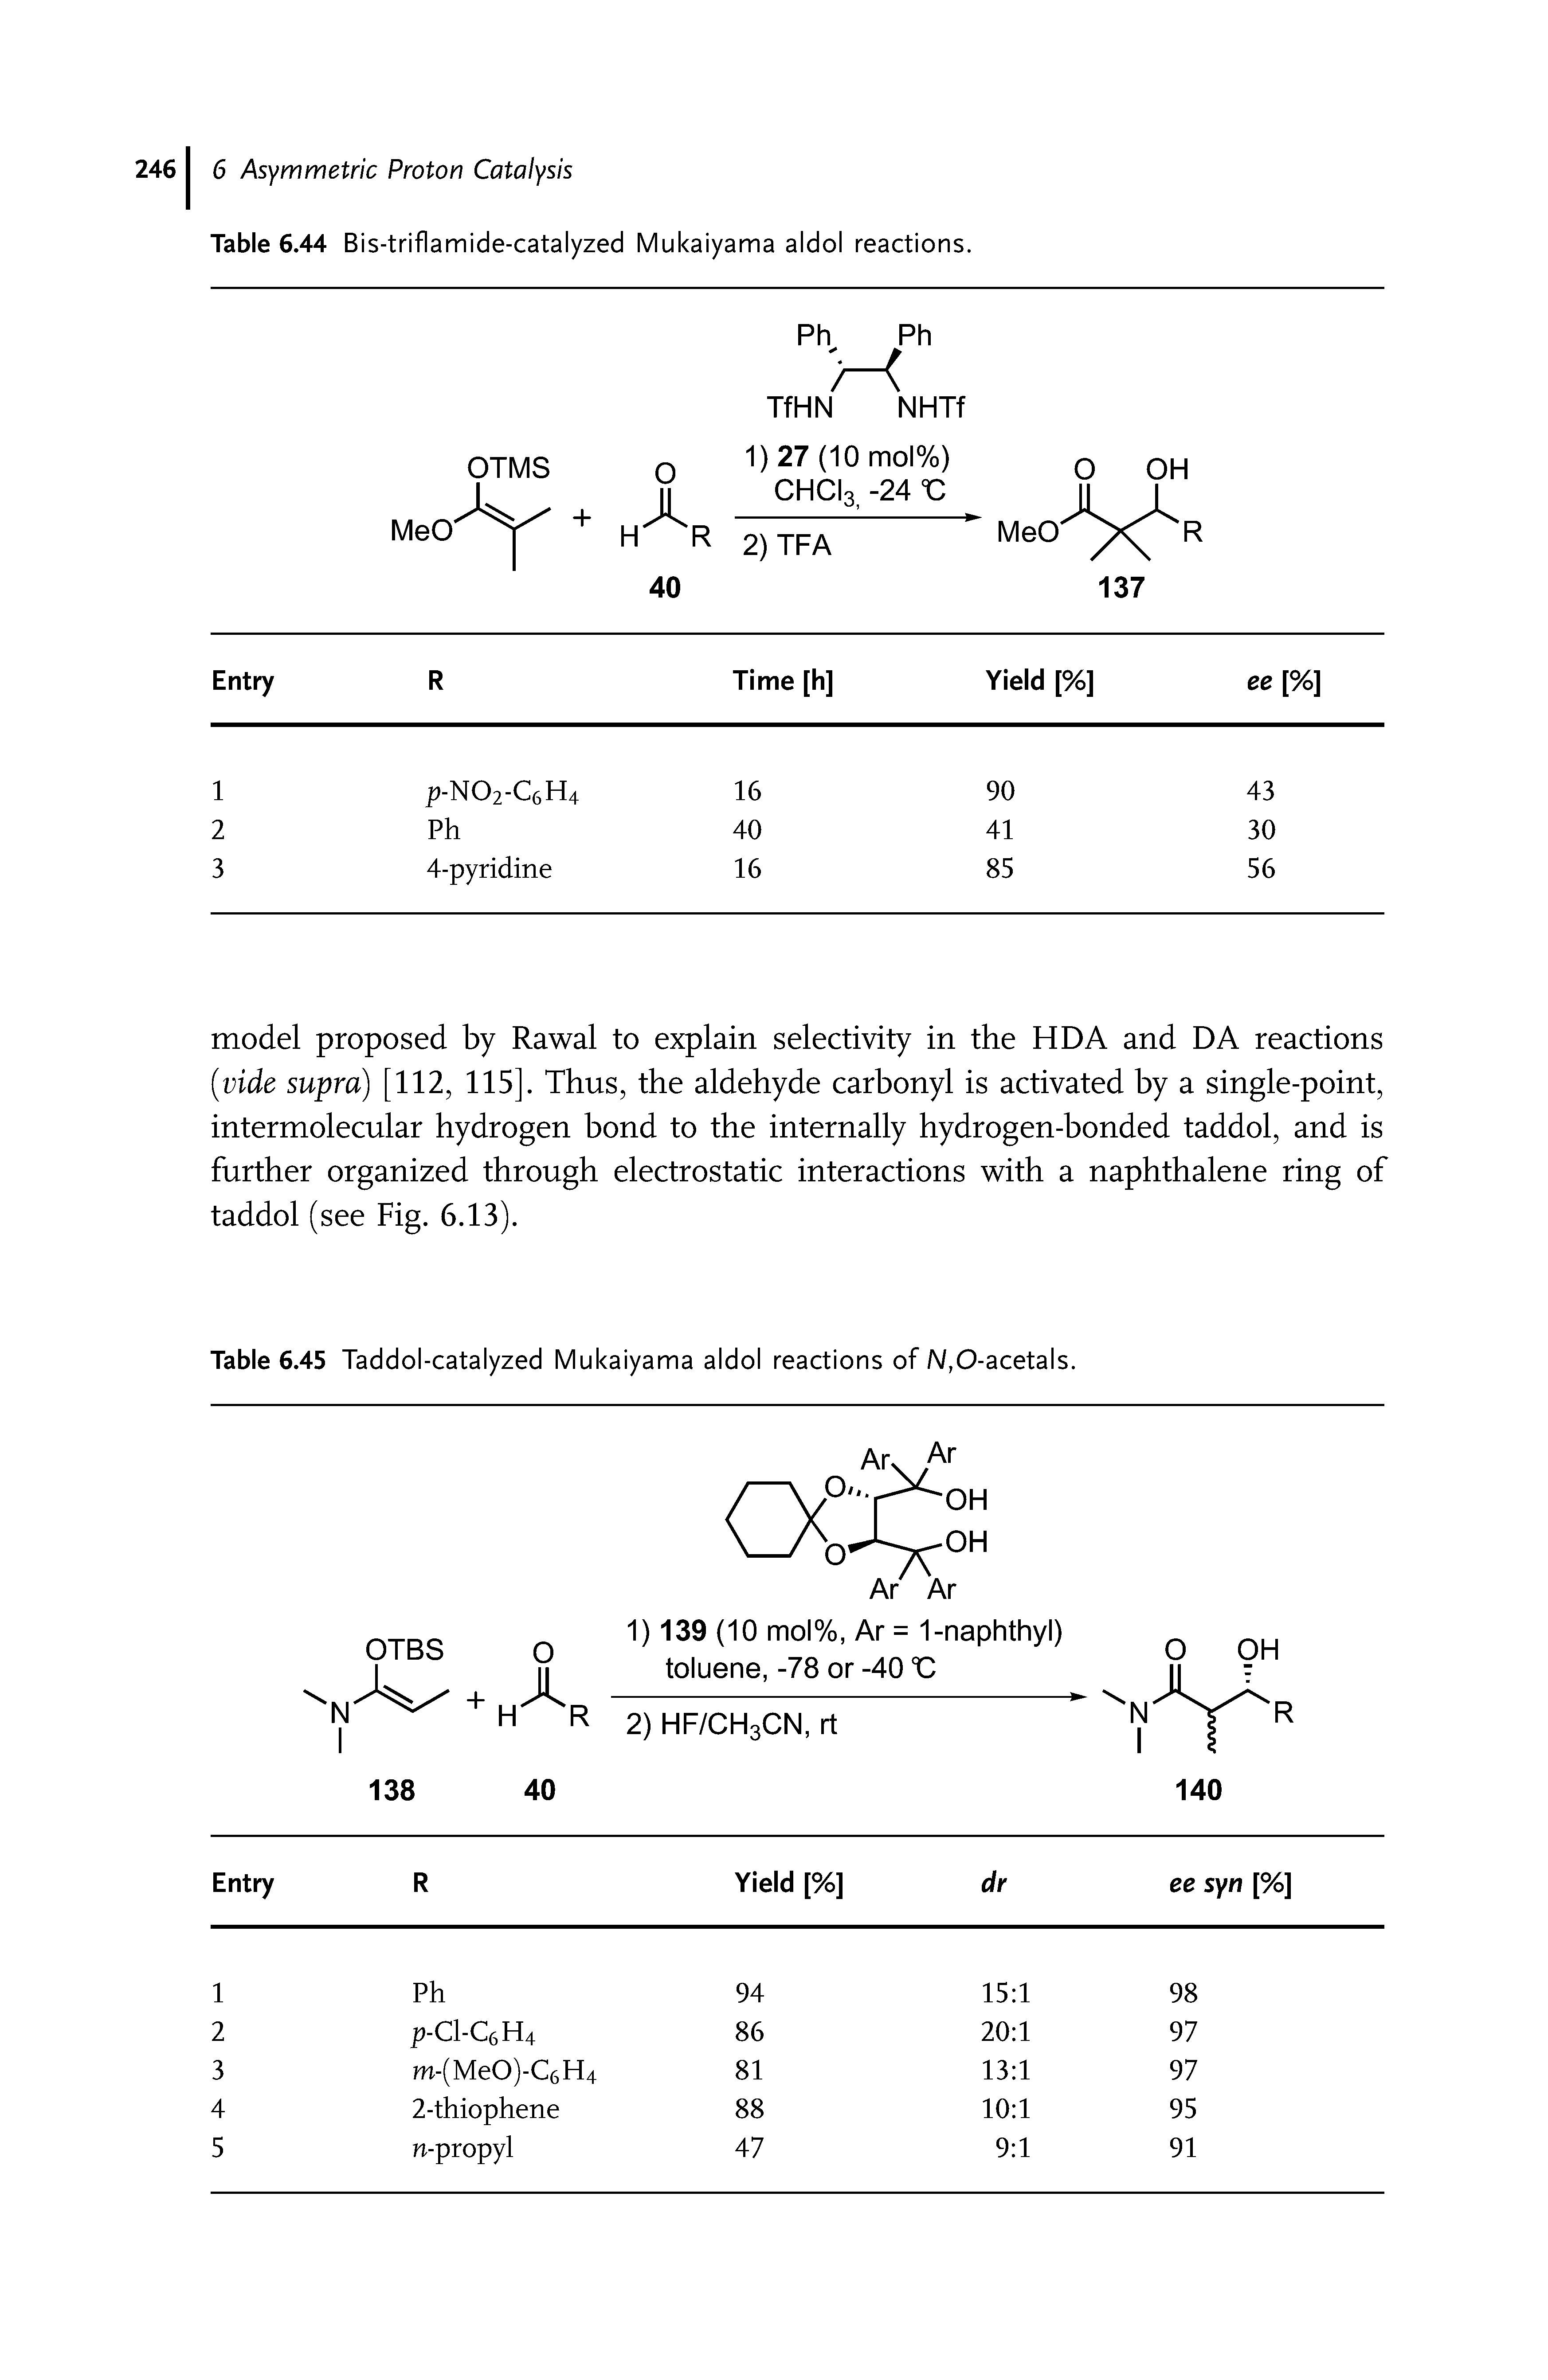 Table 6.44 Bis-triflamide-catalyzed Mukaiyama aldol reactions.